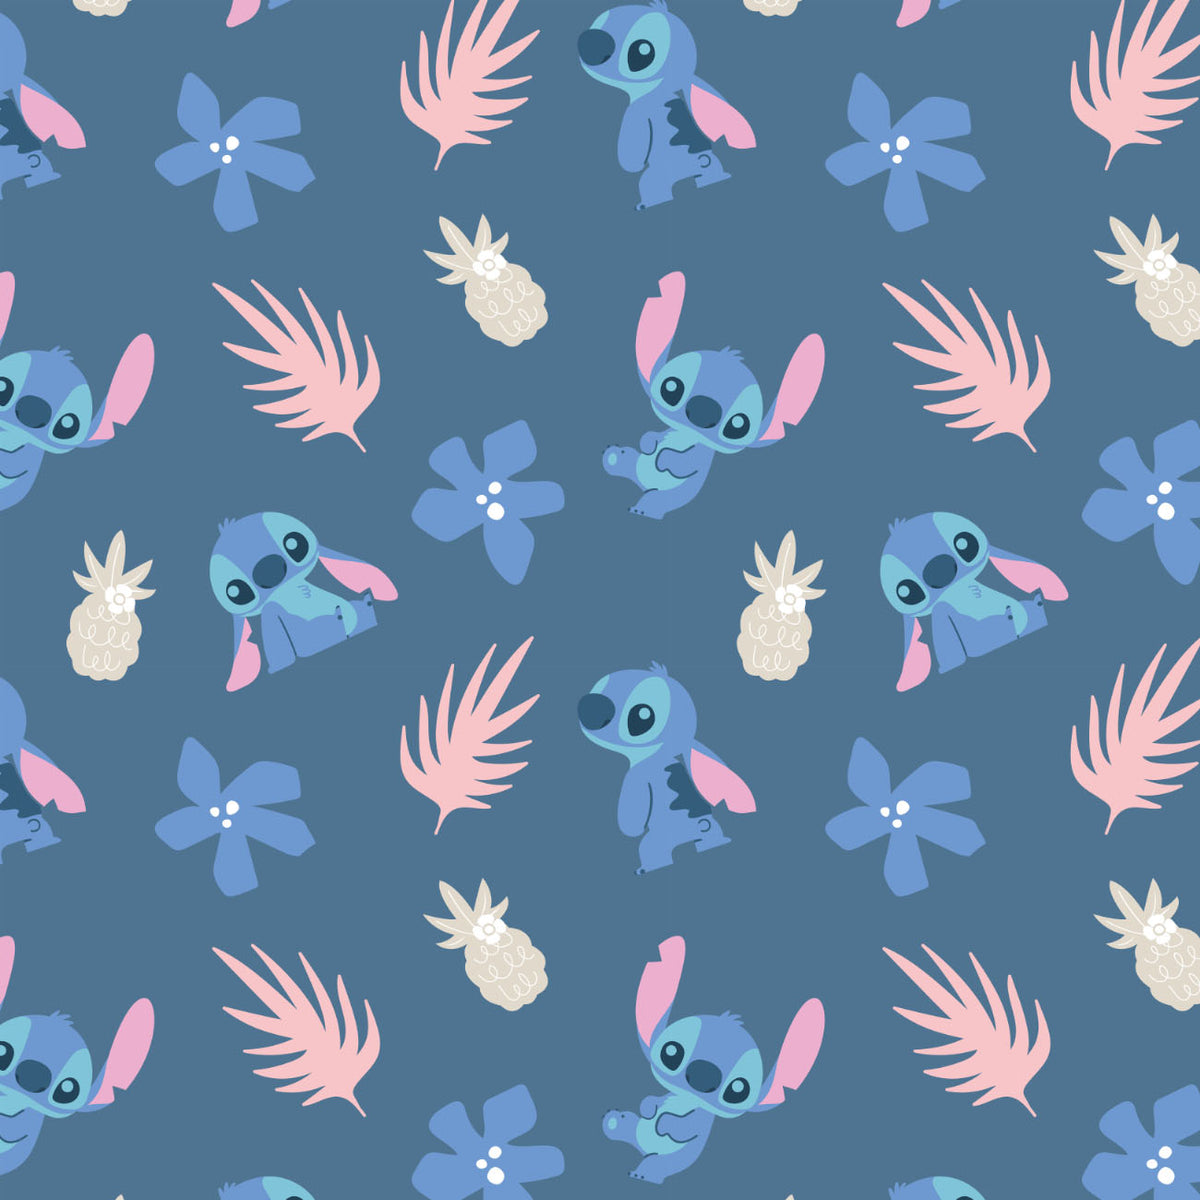 100+] Cute Disney Stitch Wallpapers